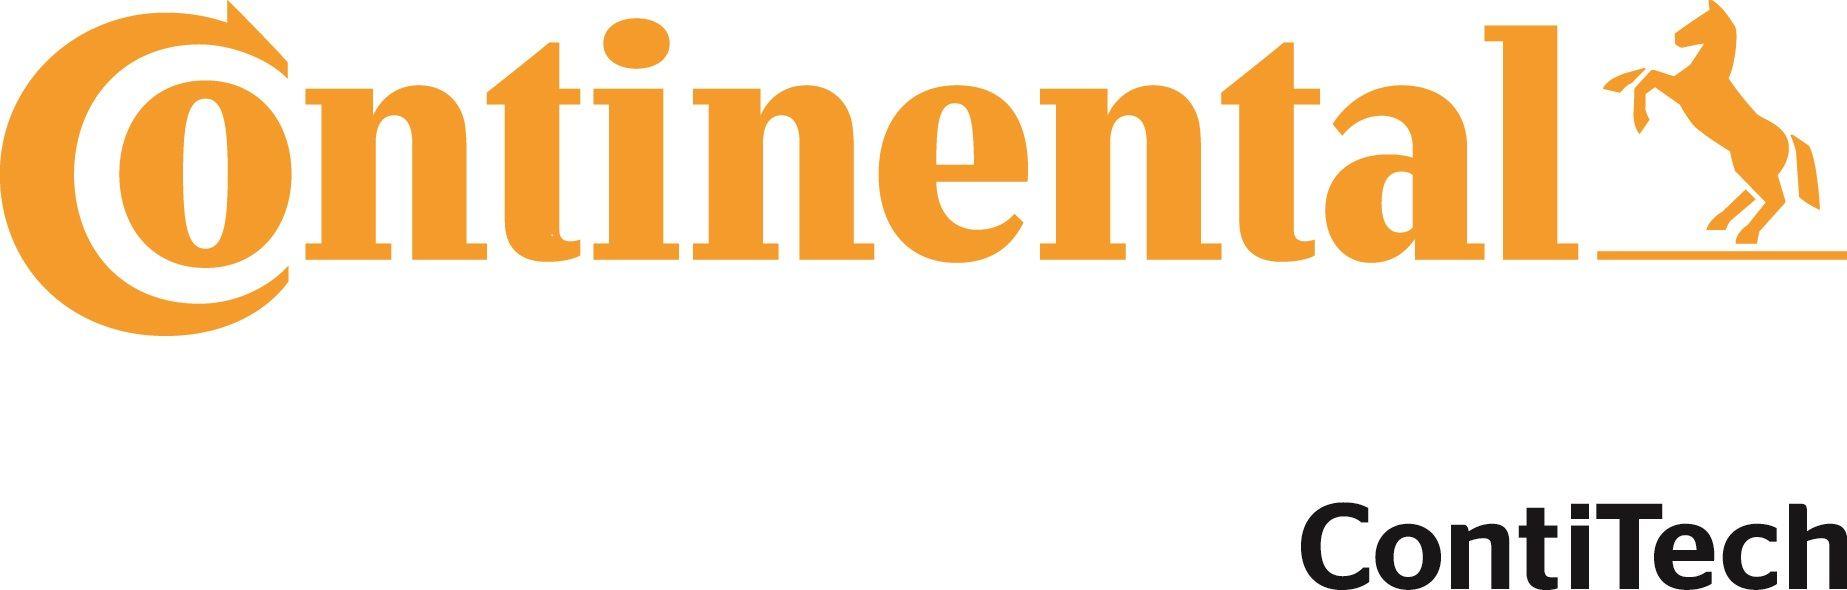 Veyance Logo - Continental Contitech North America